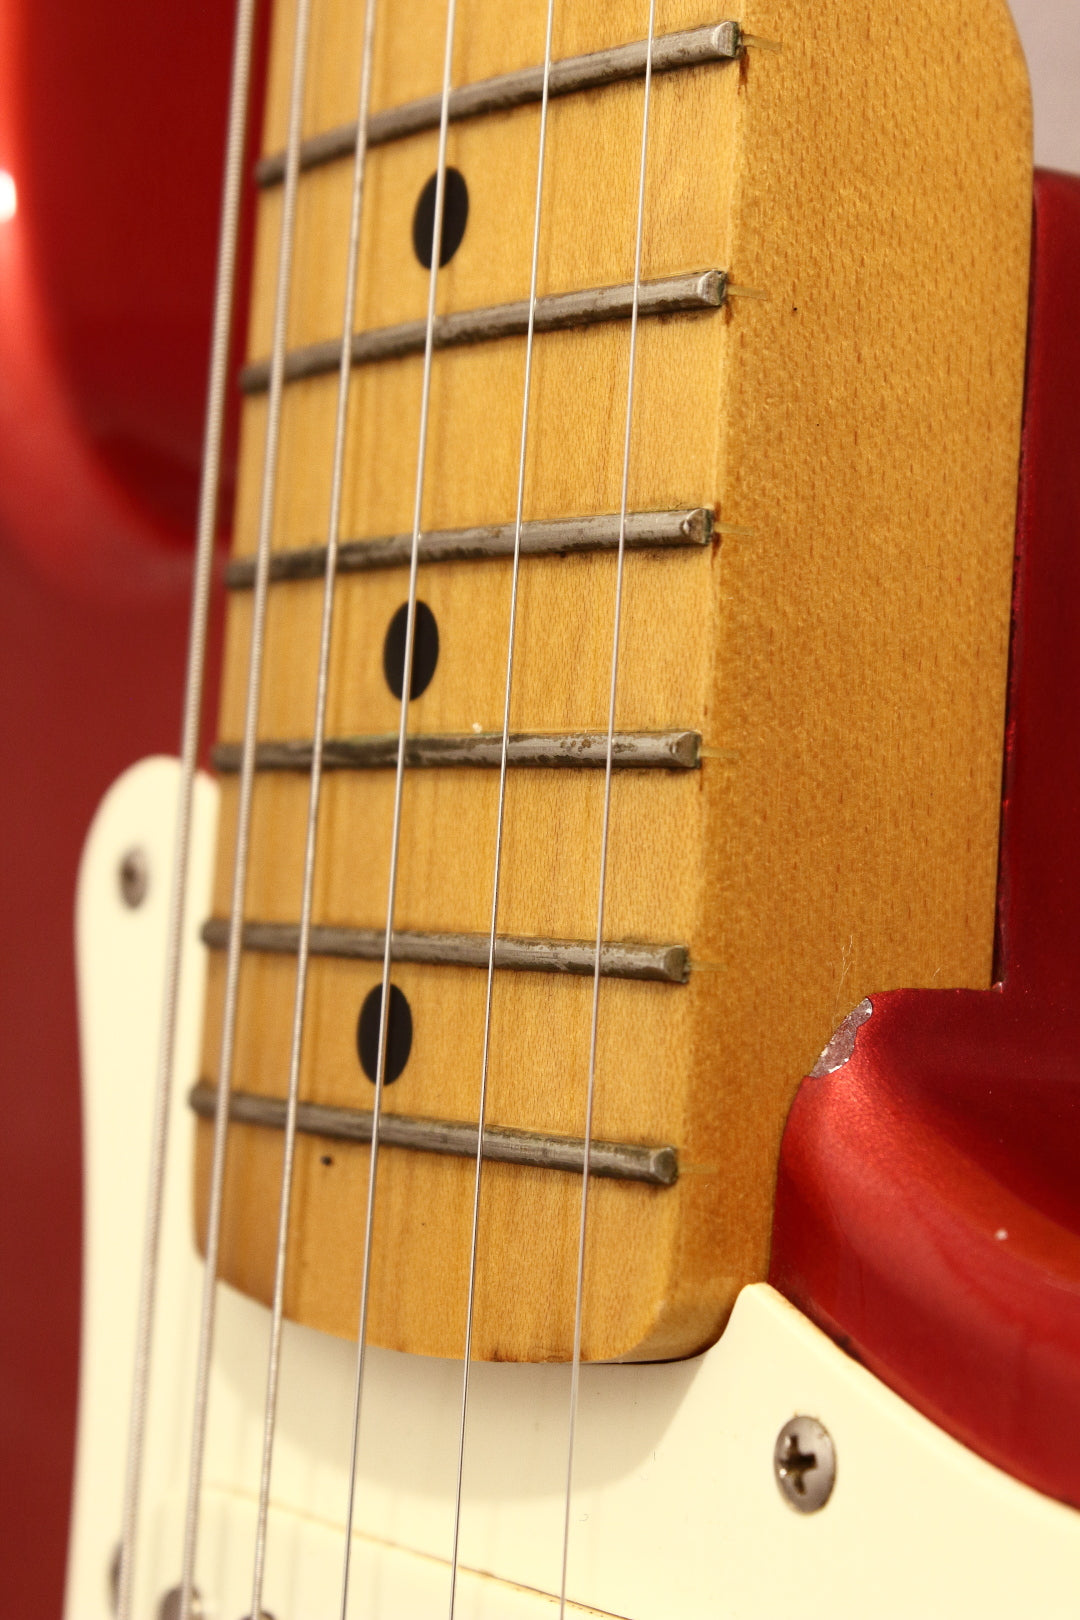 Fender Japan '57 Stratocaster Candy Apple Red ST57-53 1993